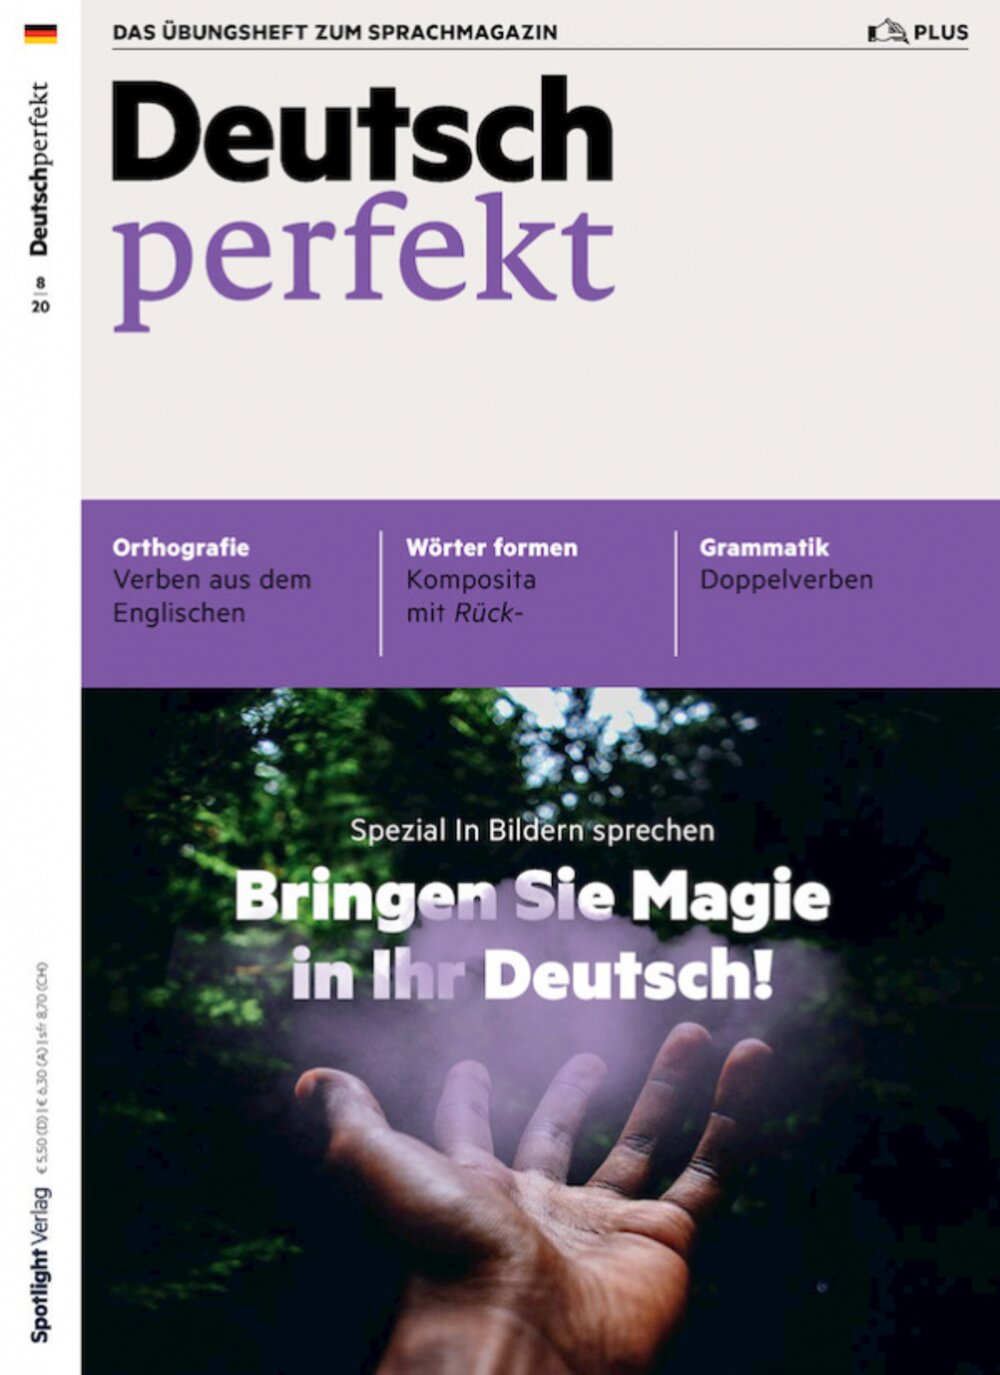 Deutsch perfekt PLUS ePaper 08/2020